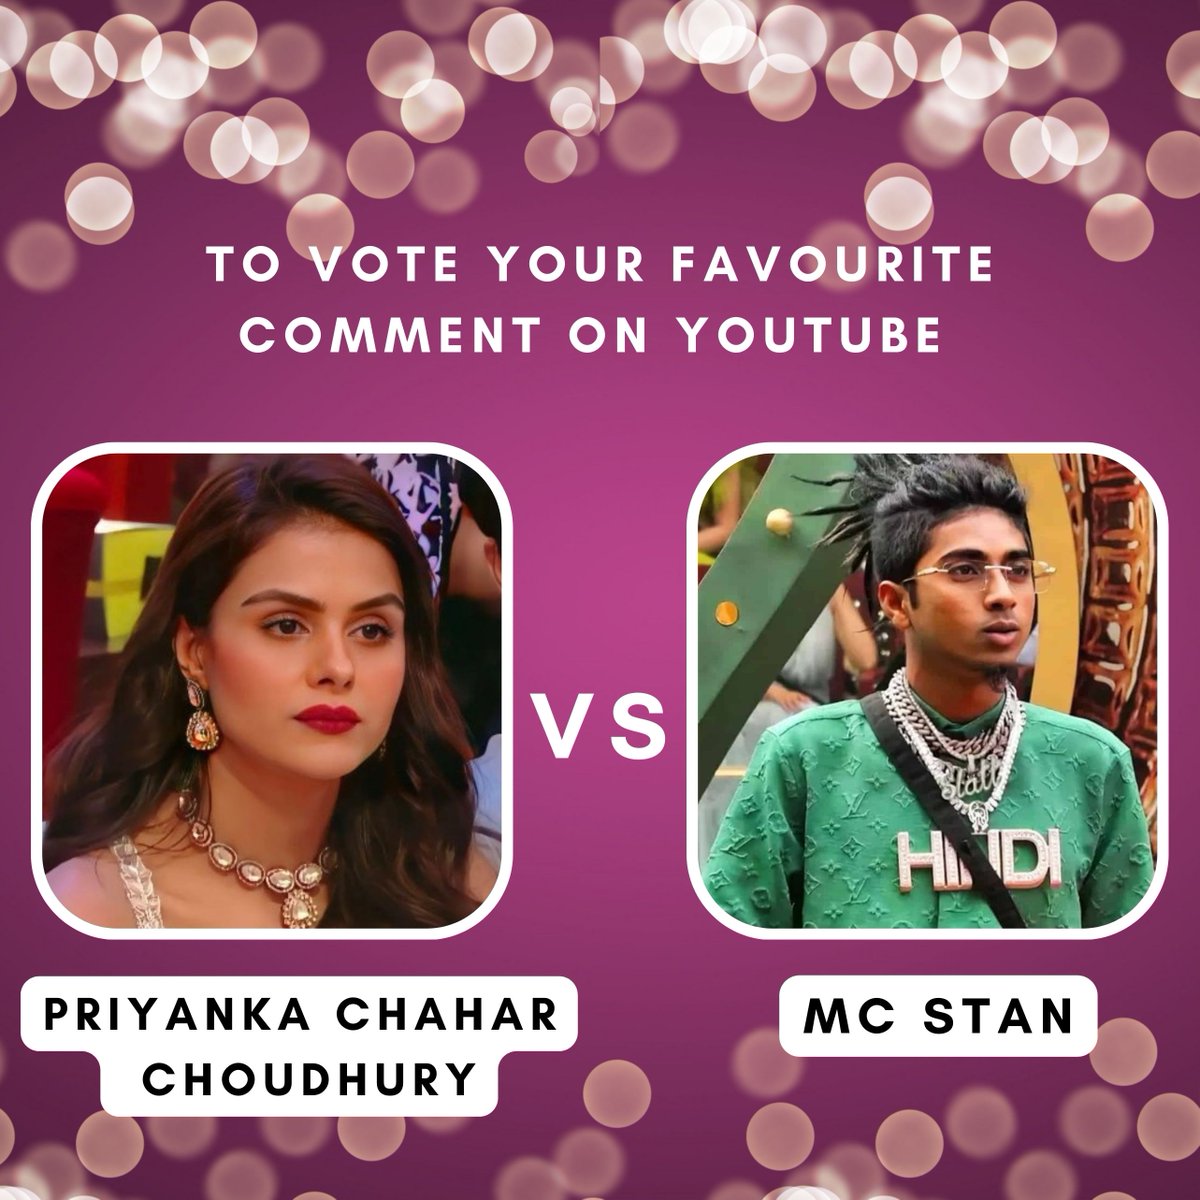 Who is your favorite? Retweet - #PriyankaChaharChoudhary Like - #McStan Vote Here youtu.be/8qc7B7ZAGOc #BiggBoss16 | #PriyAnkit | #BB16 | #PriyankaChaudhary #PriyankaChaharChaudhary #MCStanlsTheBoss #MCStan𓃵 #MCStanArmy